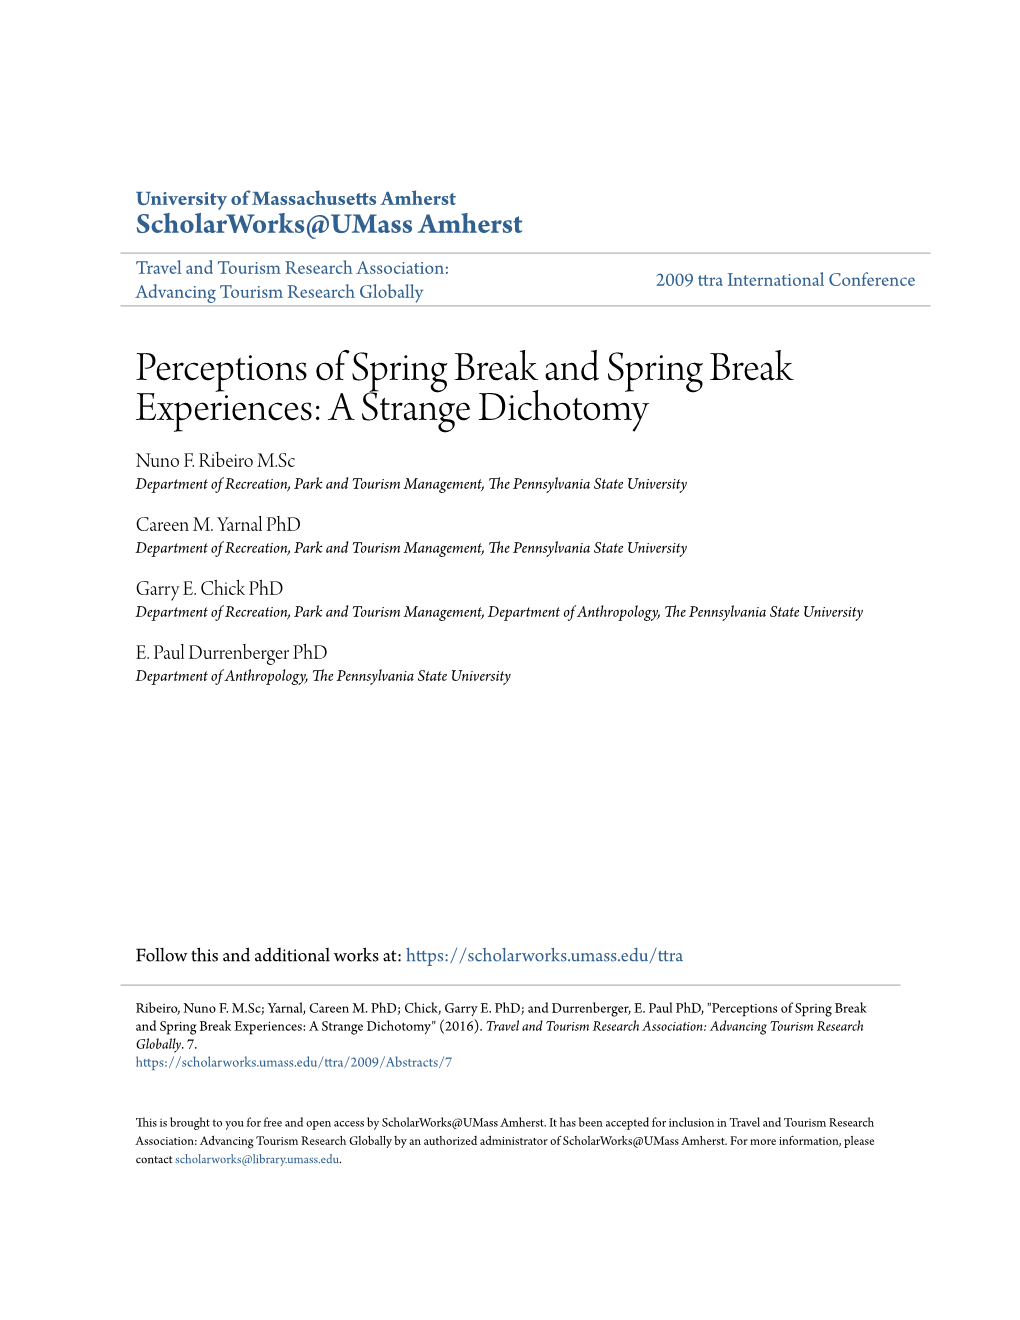 Perceptions of Spring Break and Spring Break Experiences: a Strange Dichotomy Nuno F